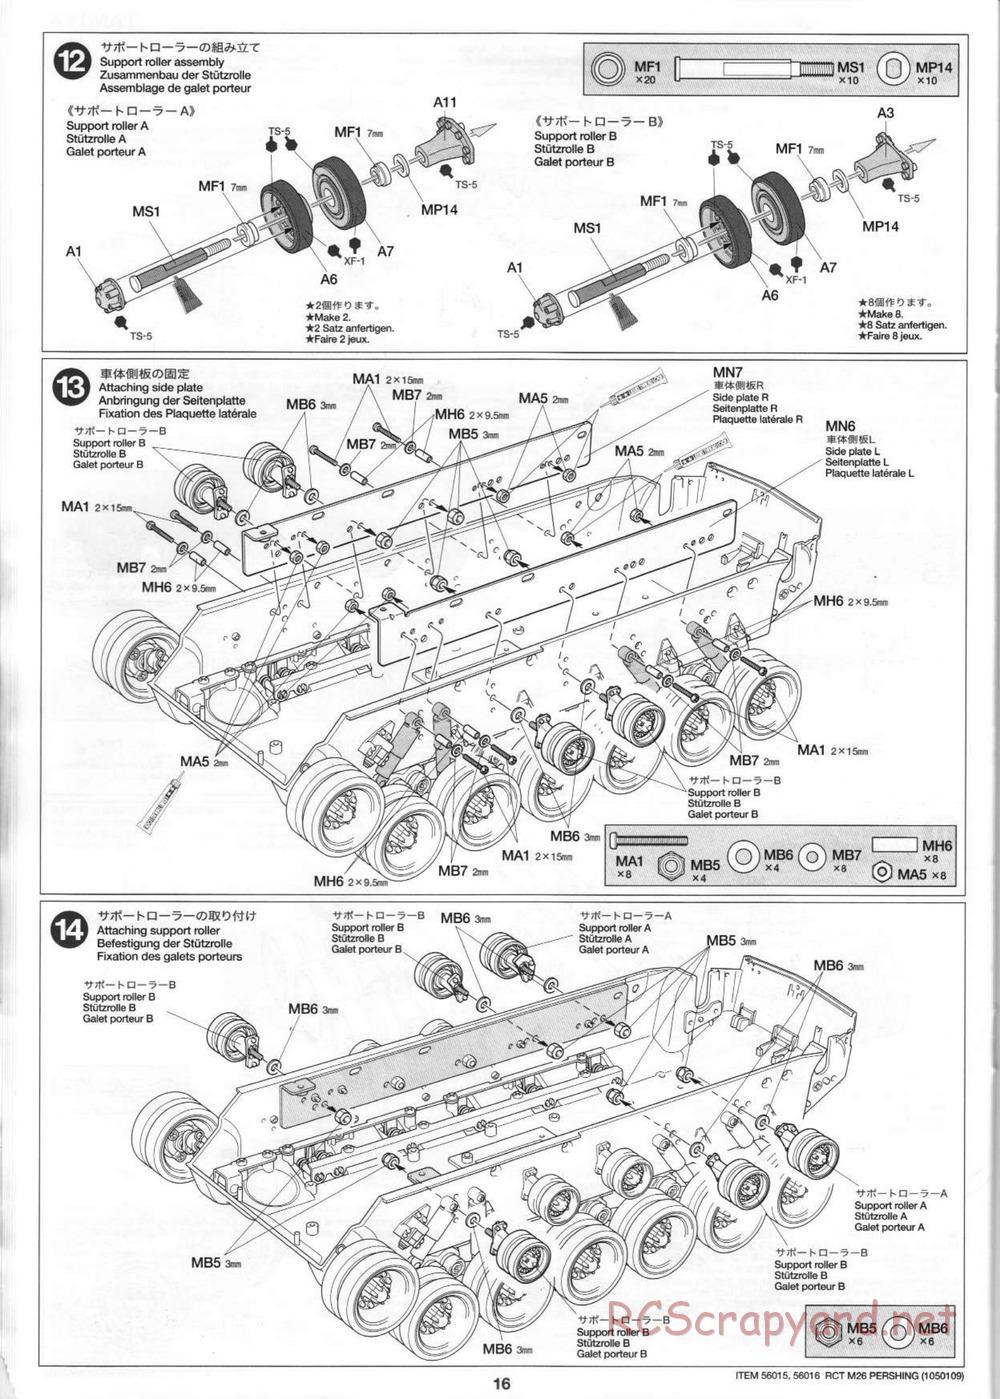 Tamiya - M26 Pershing - 1/16 Scale Chassis - Manual - Page 16